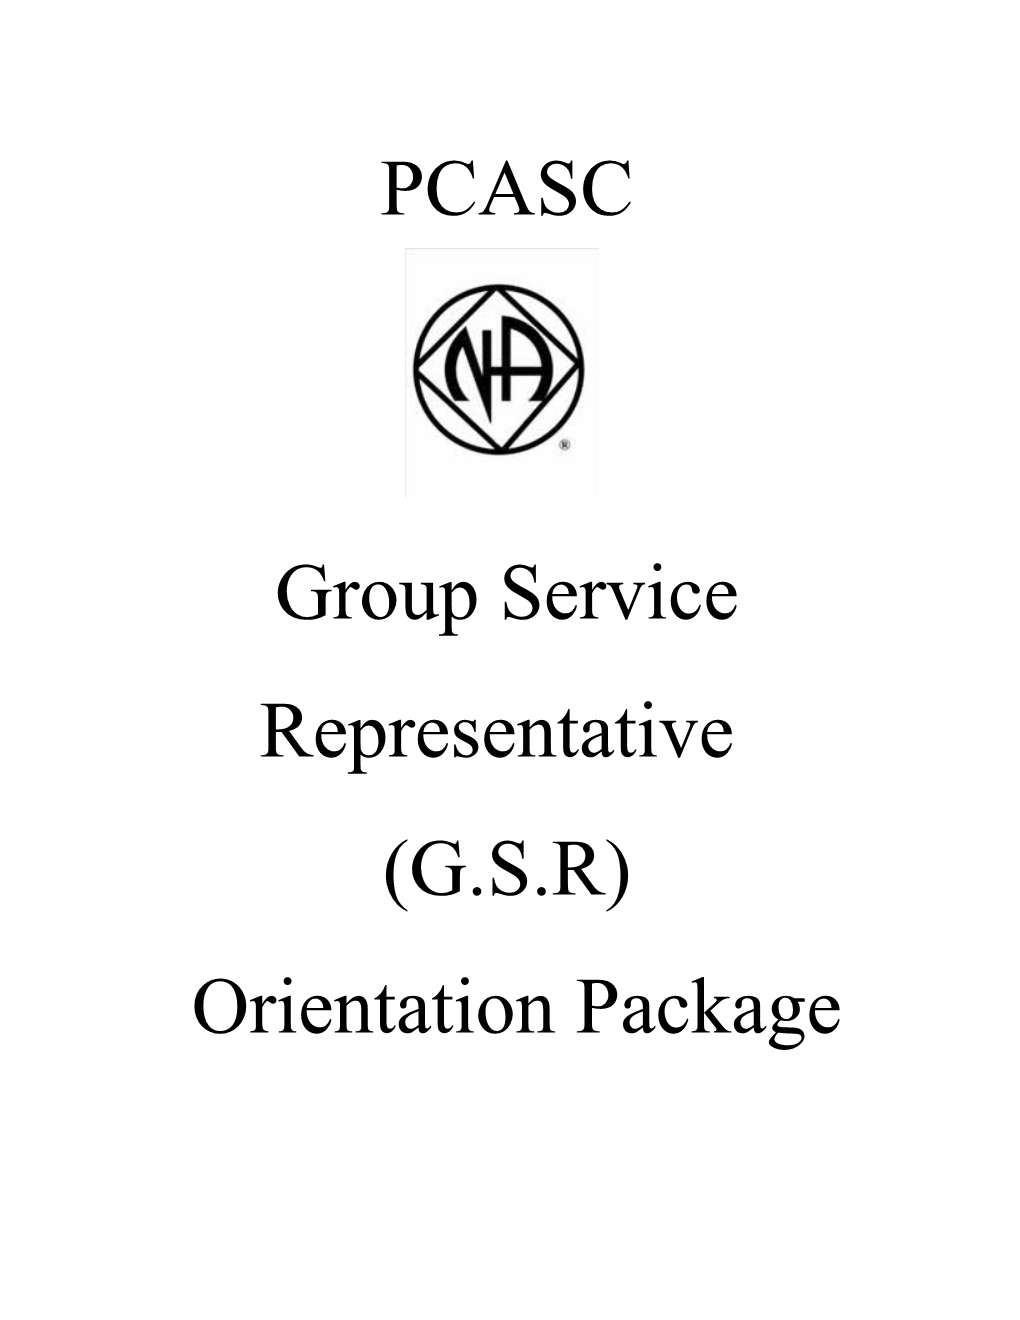 Group Service Representative